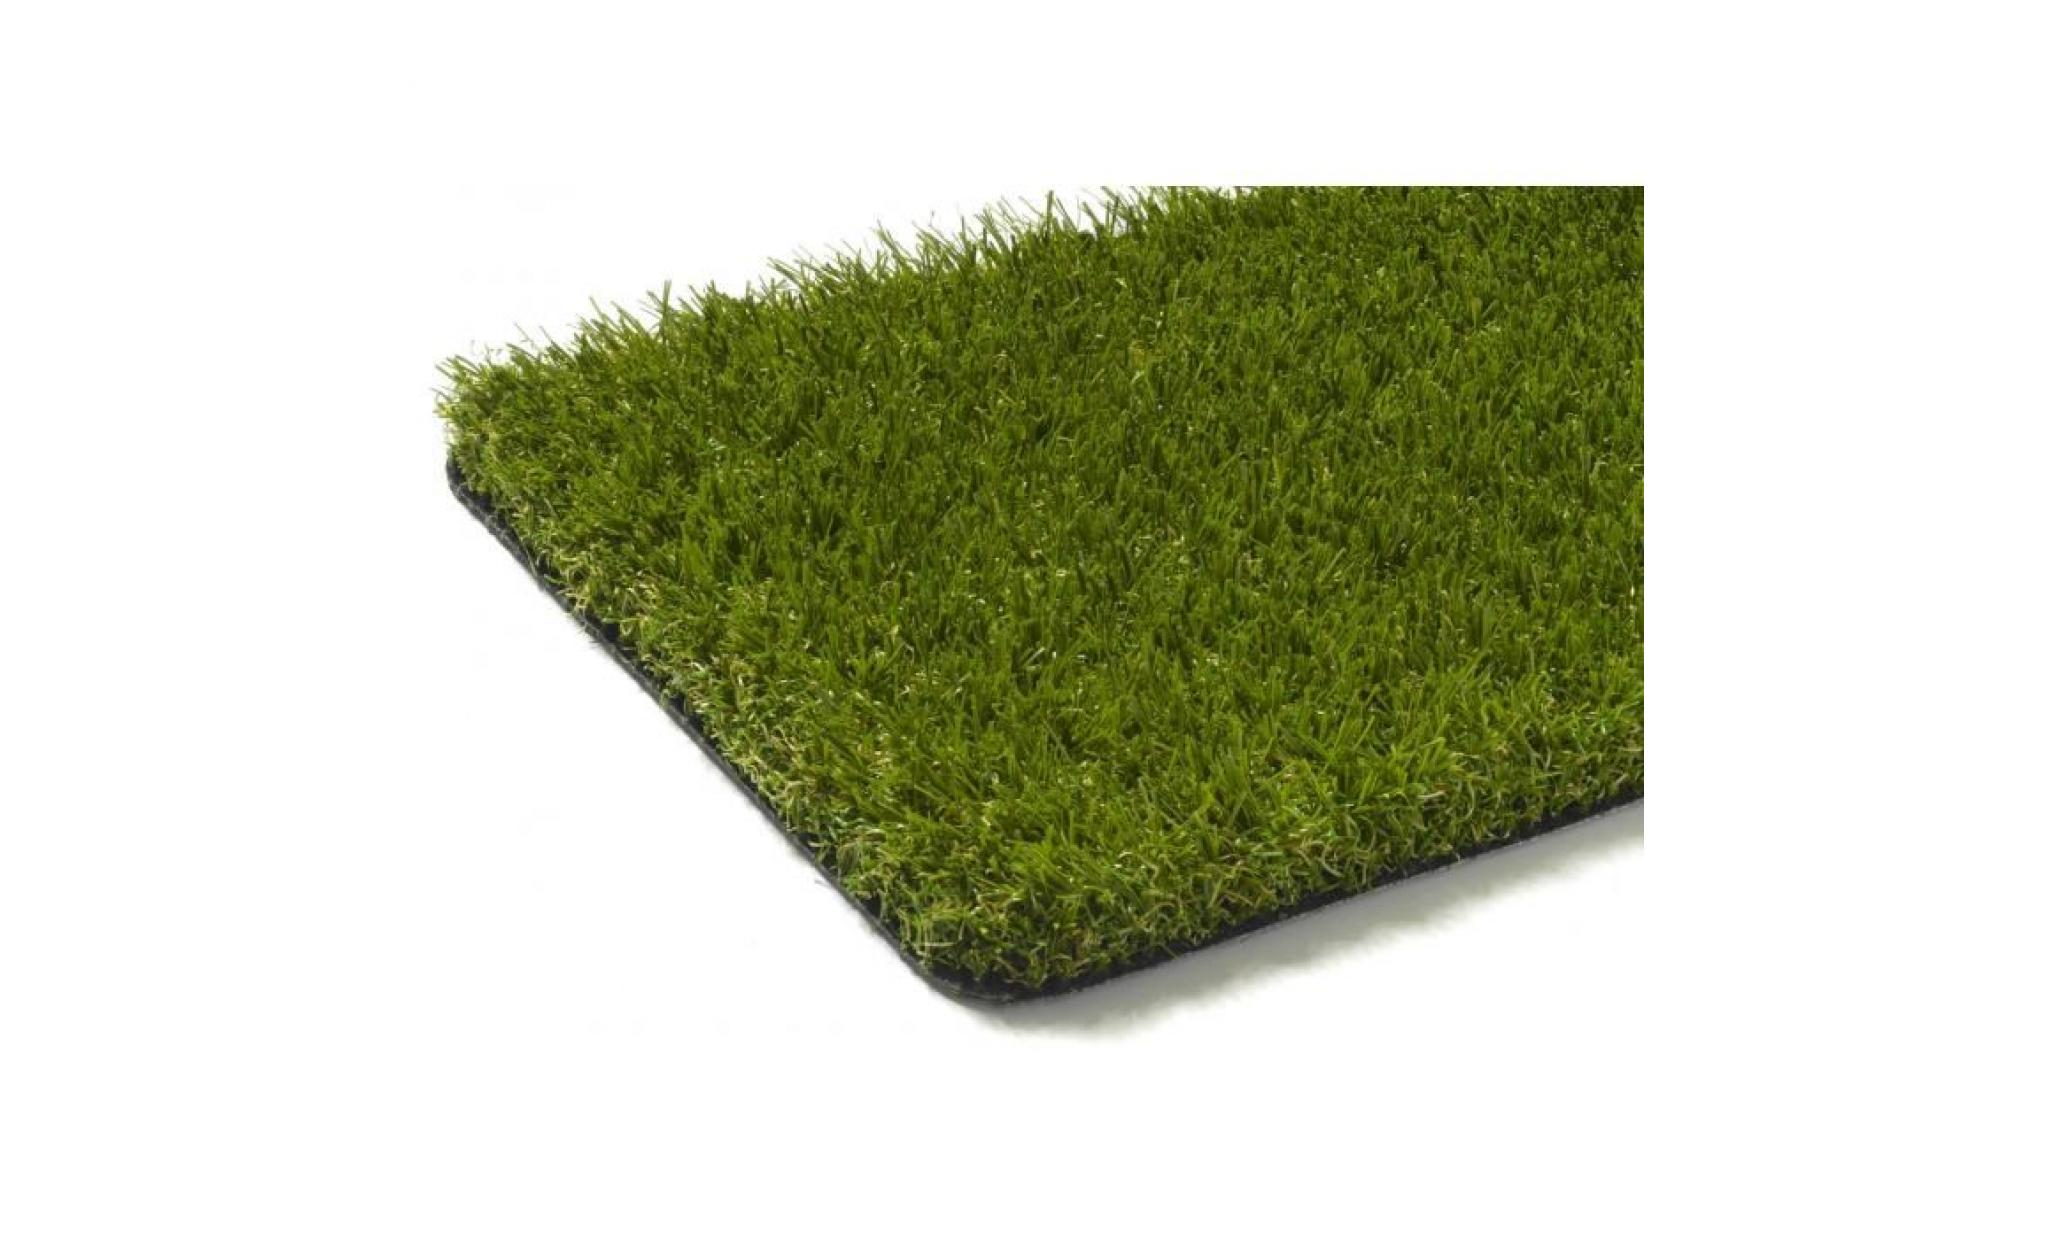 oxford   tapis type luxe gazon artificiel – pour jardin, terrasse, balcon   vert  [200x50 cm]